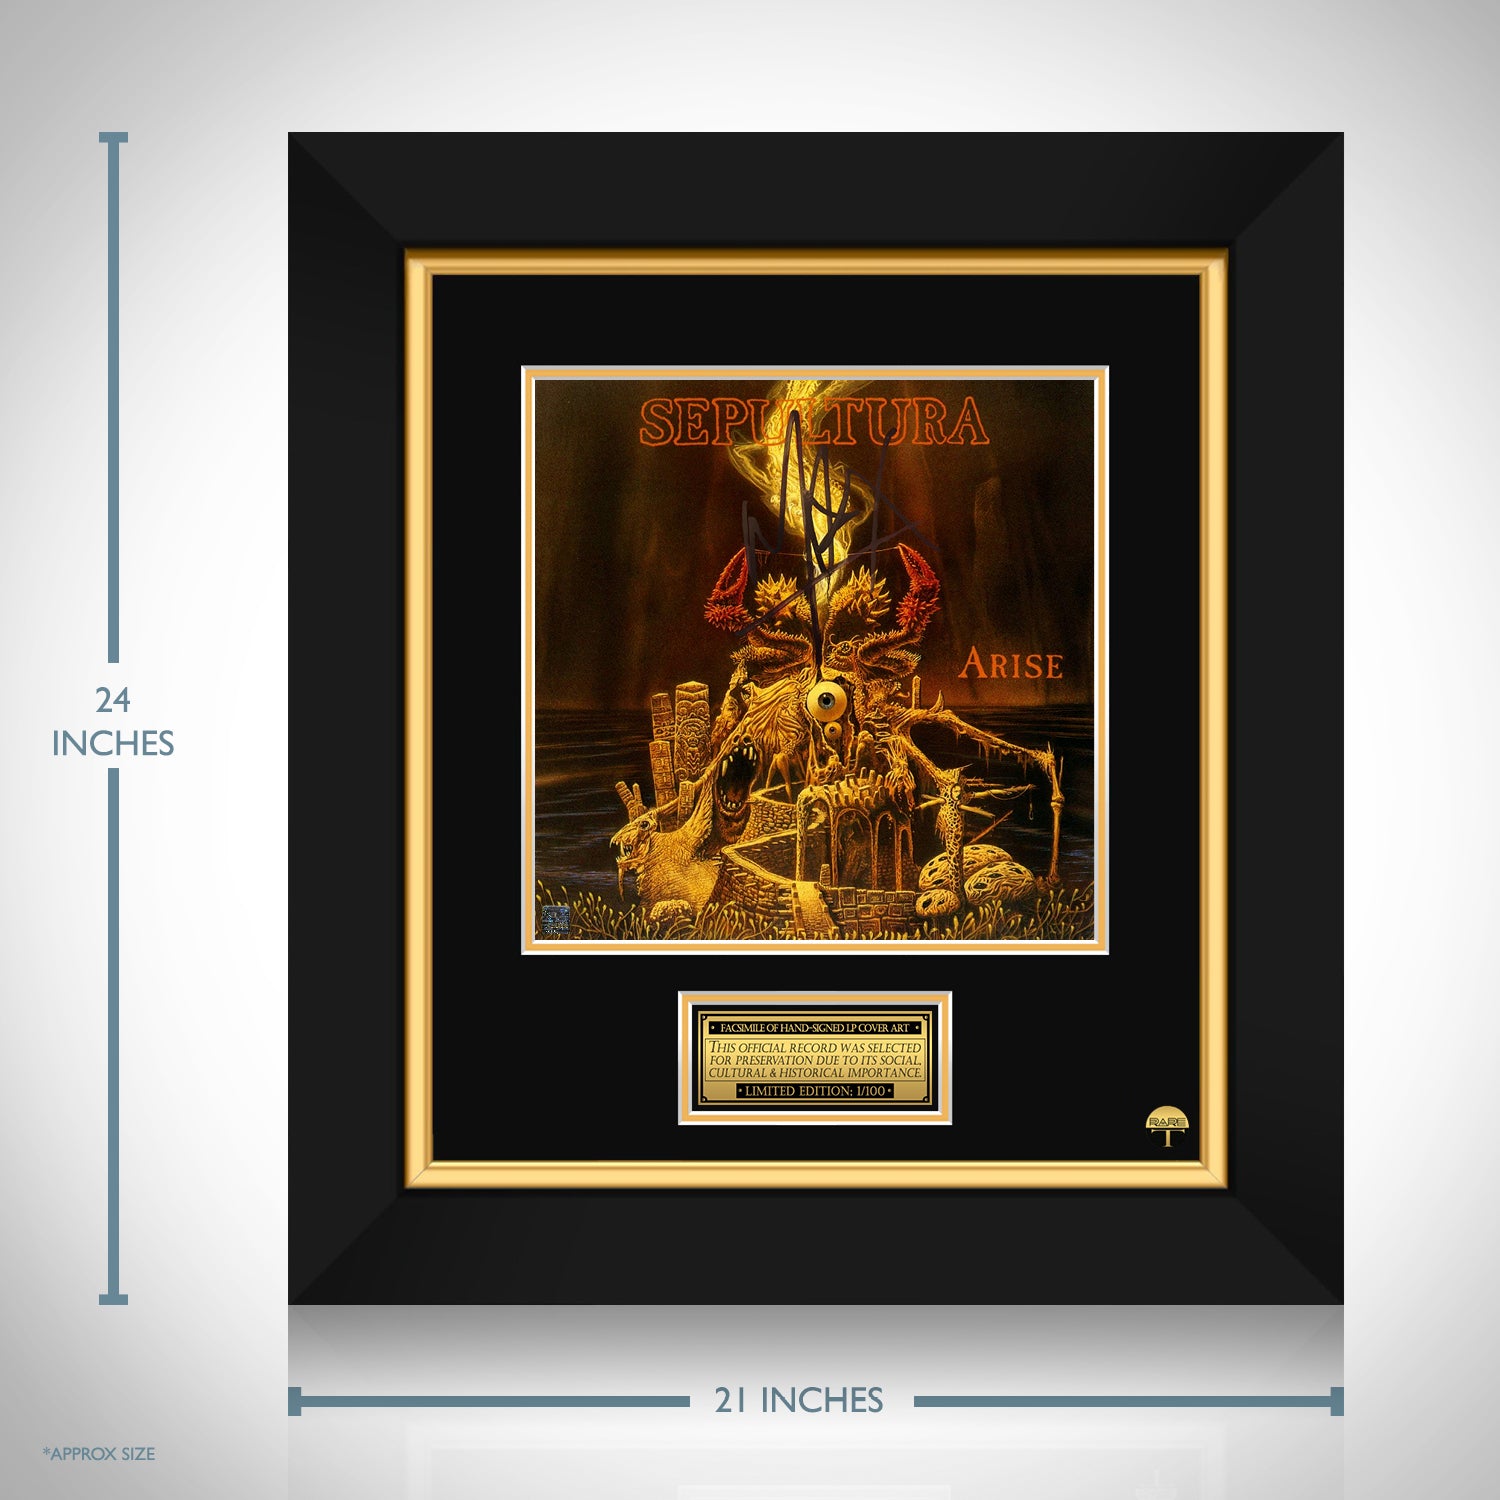 Sepultura Arise LP Cover Limited Signature Edition Custom Frame 